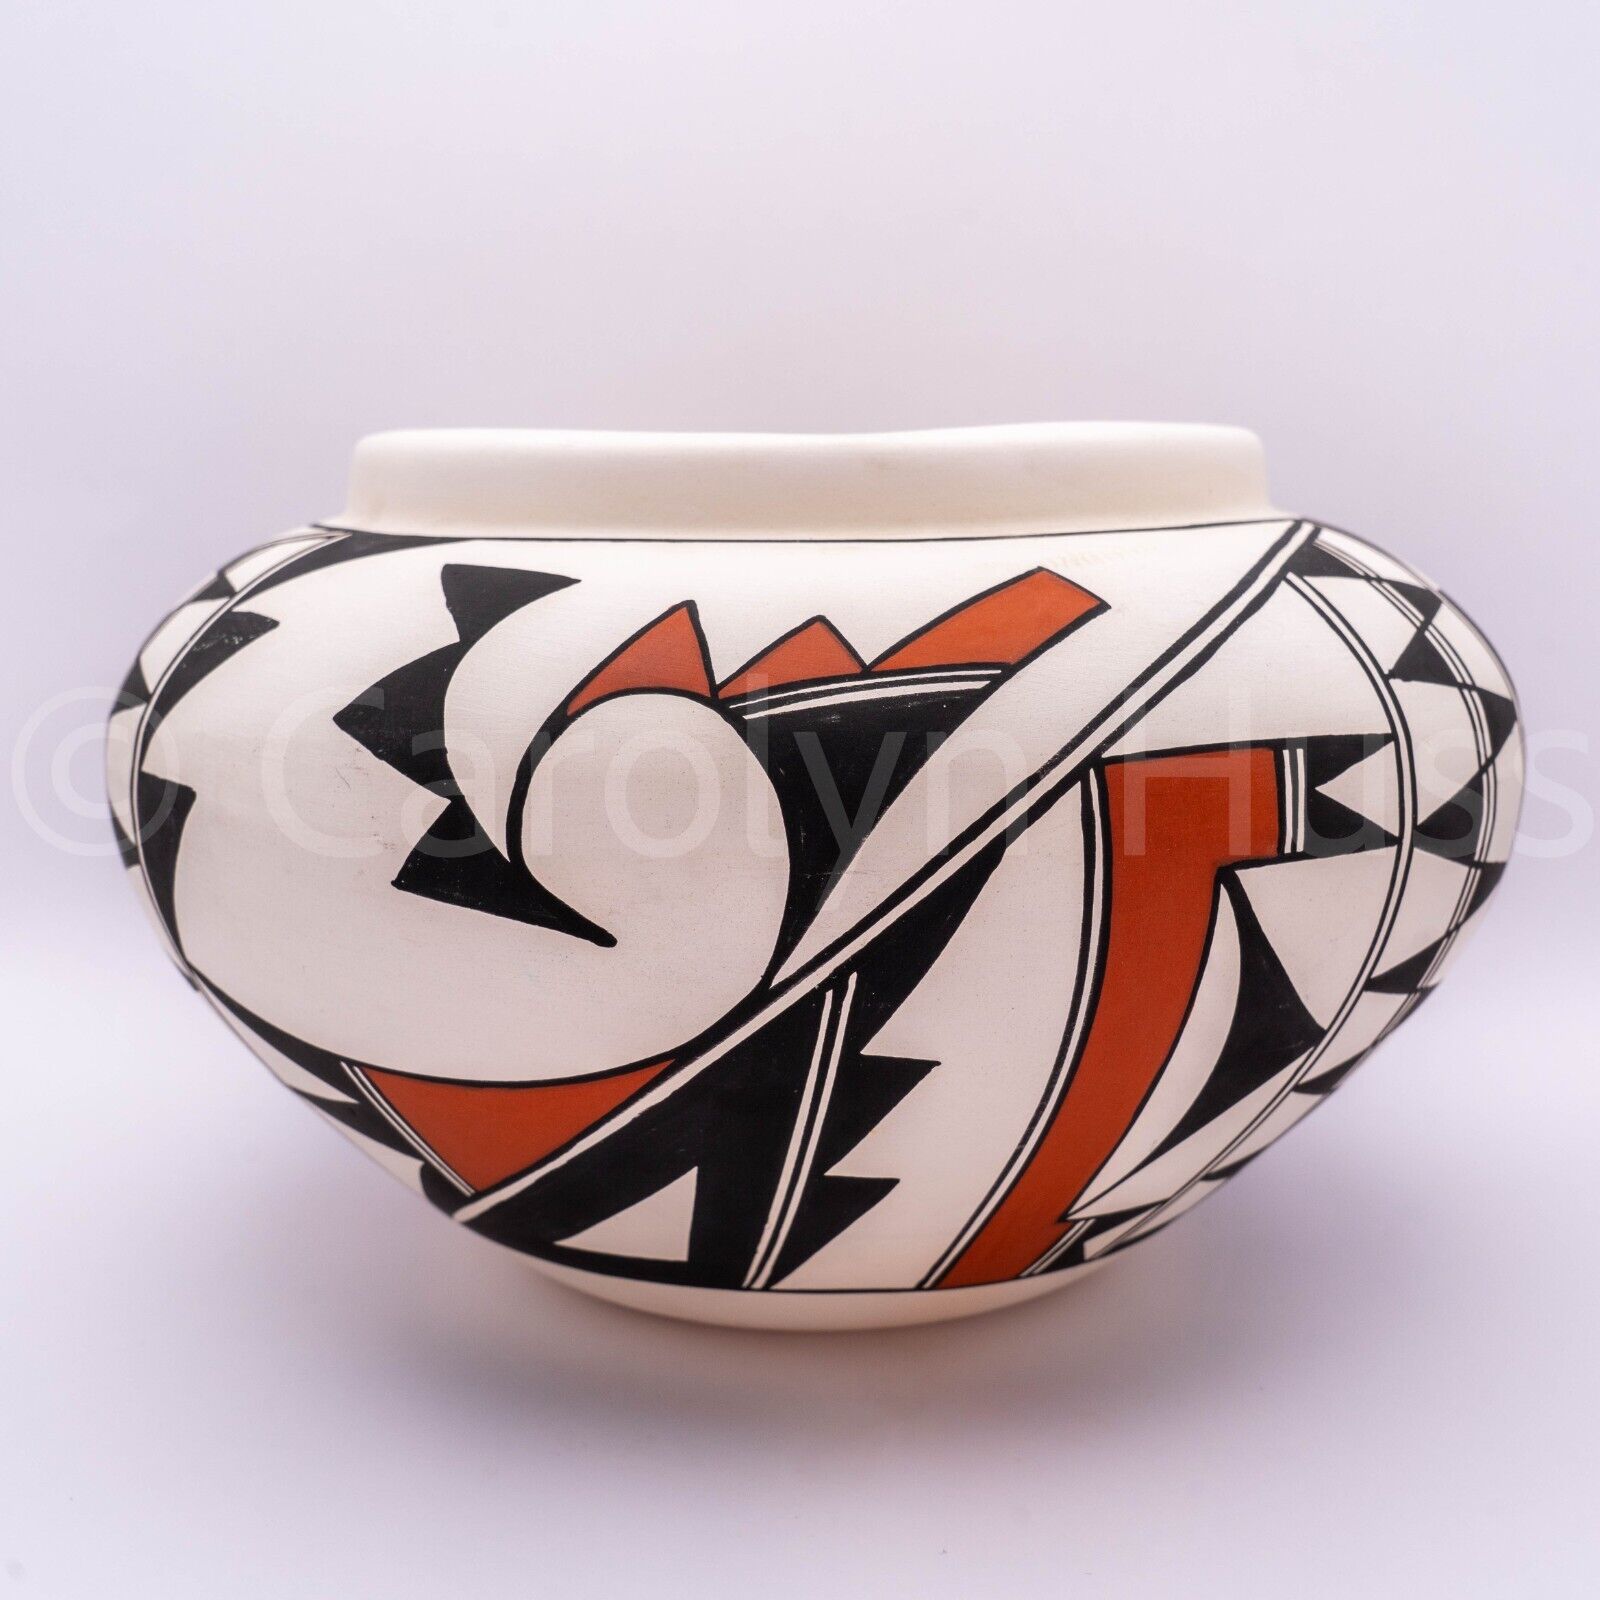 Acoma New Mexico Native American pottery bowl signed